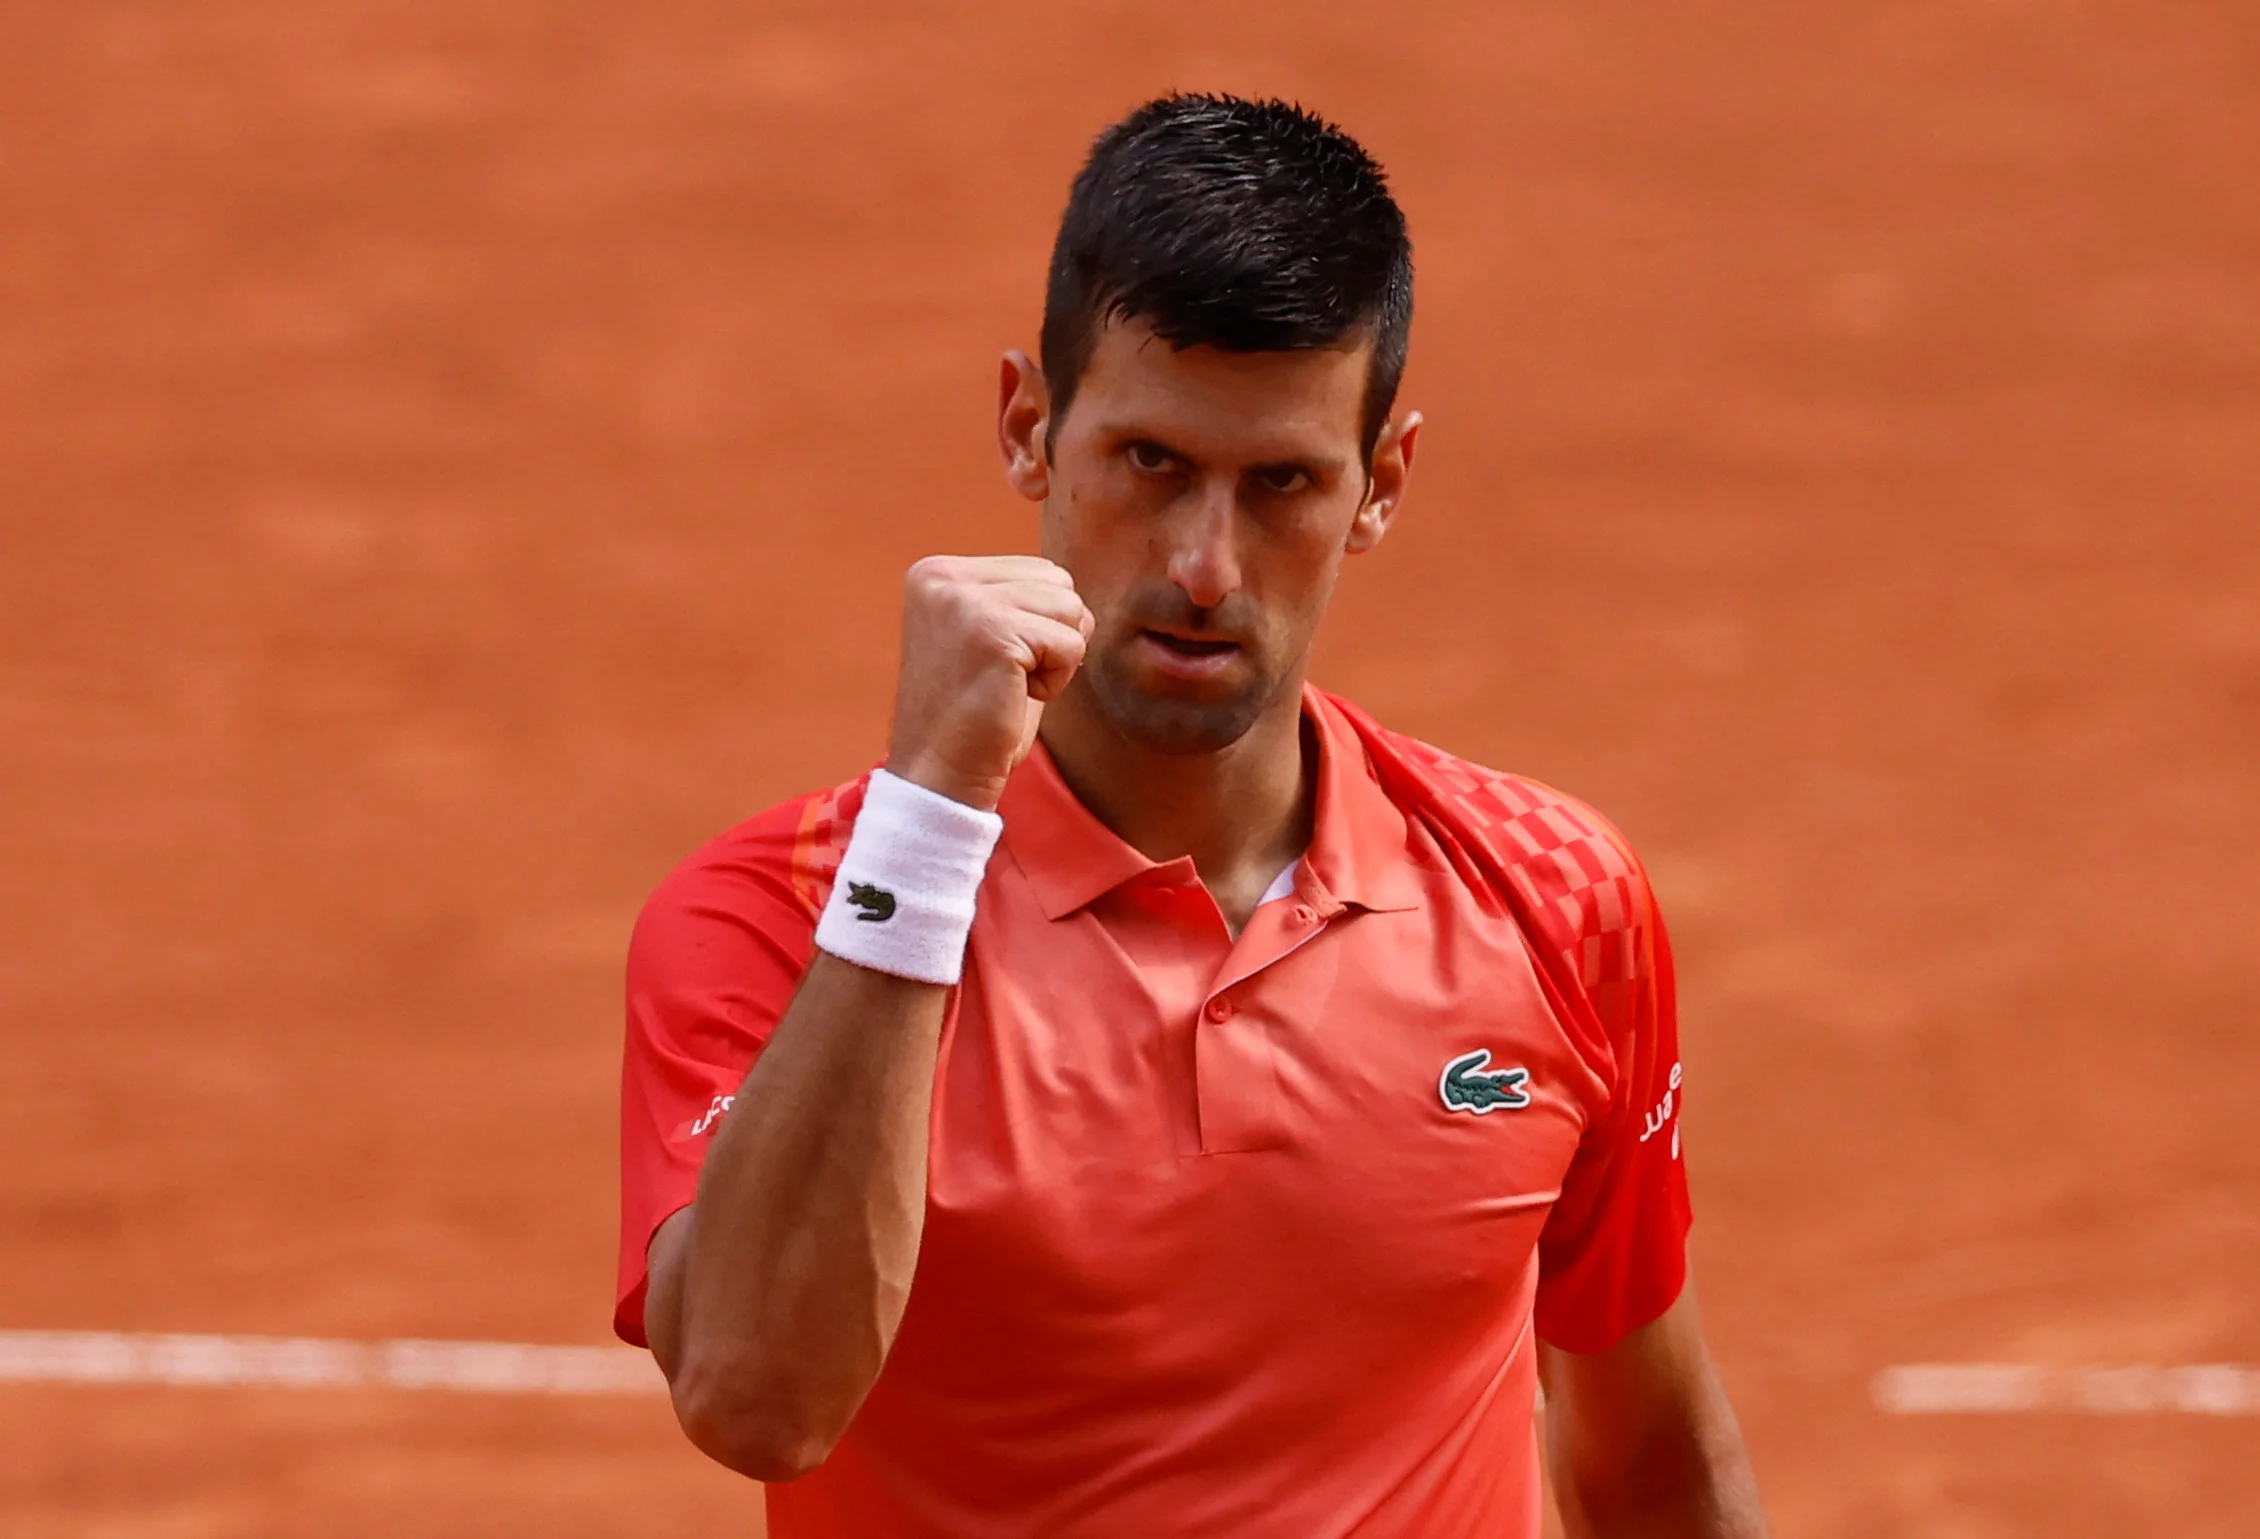 Watch Novak Djokovic Vs. Casper Ruud French Open Men's Final Match